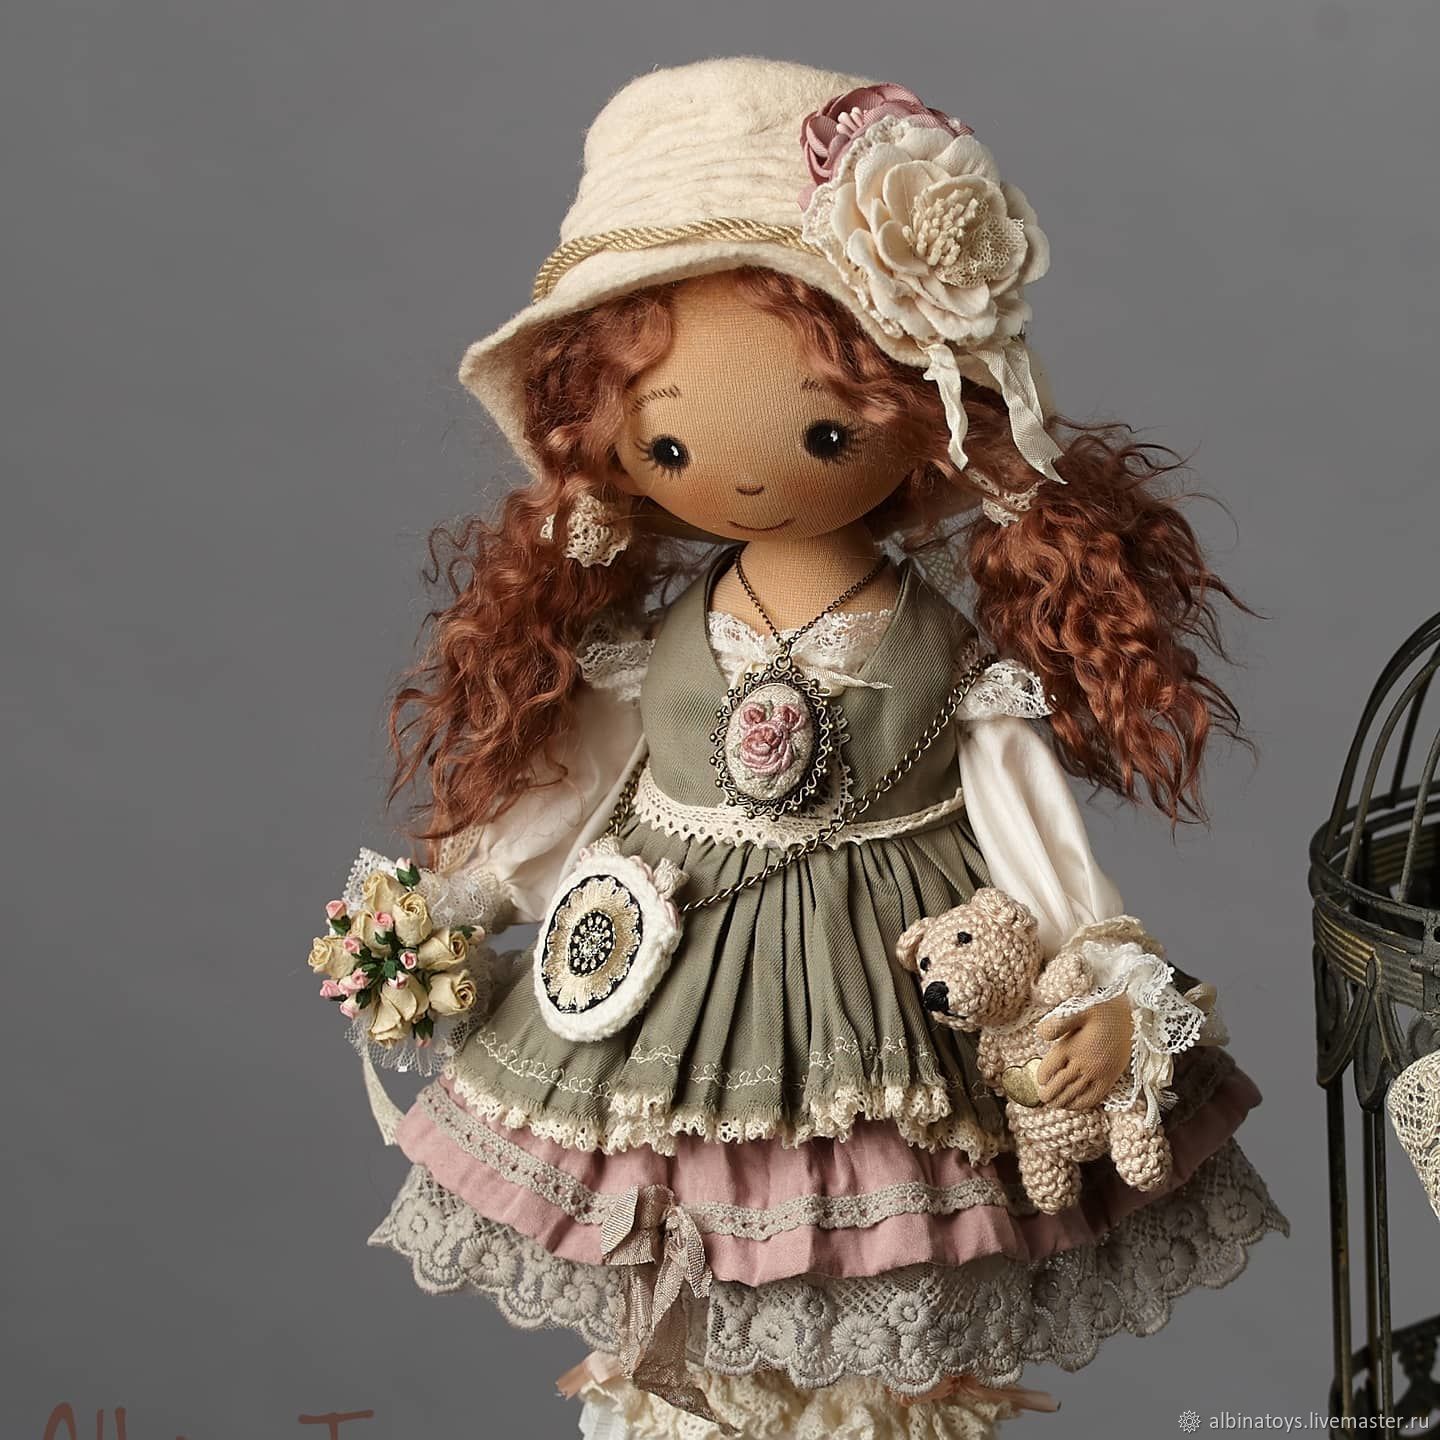 Textile doll doll Tilda doll gift interior doll boho style rag doll gift girl handmade handmade doll collectible doll